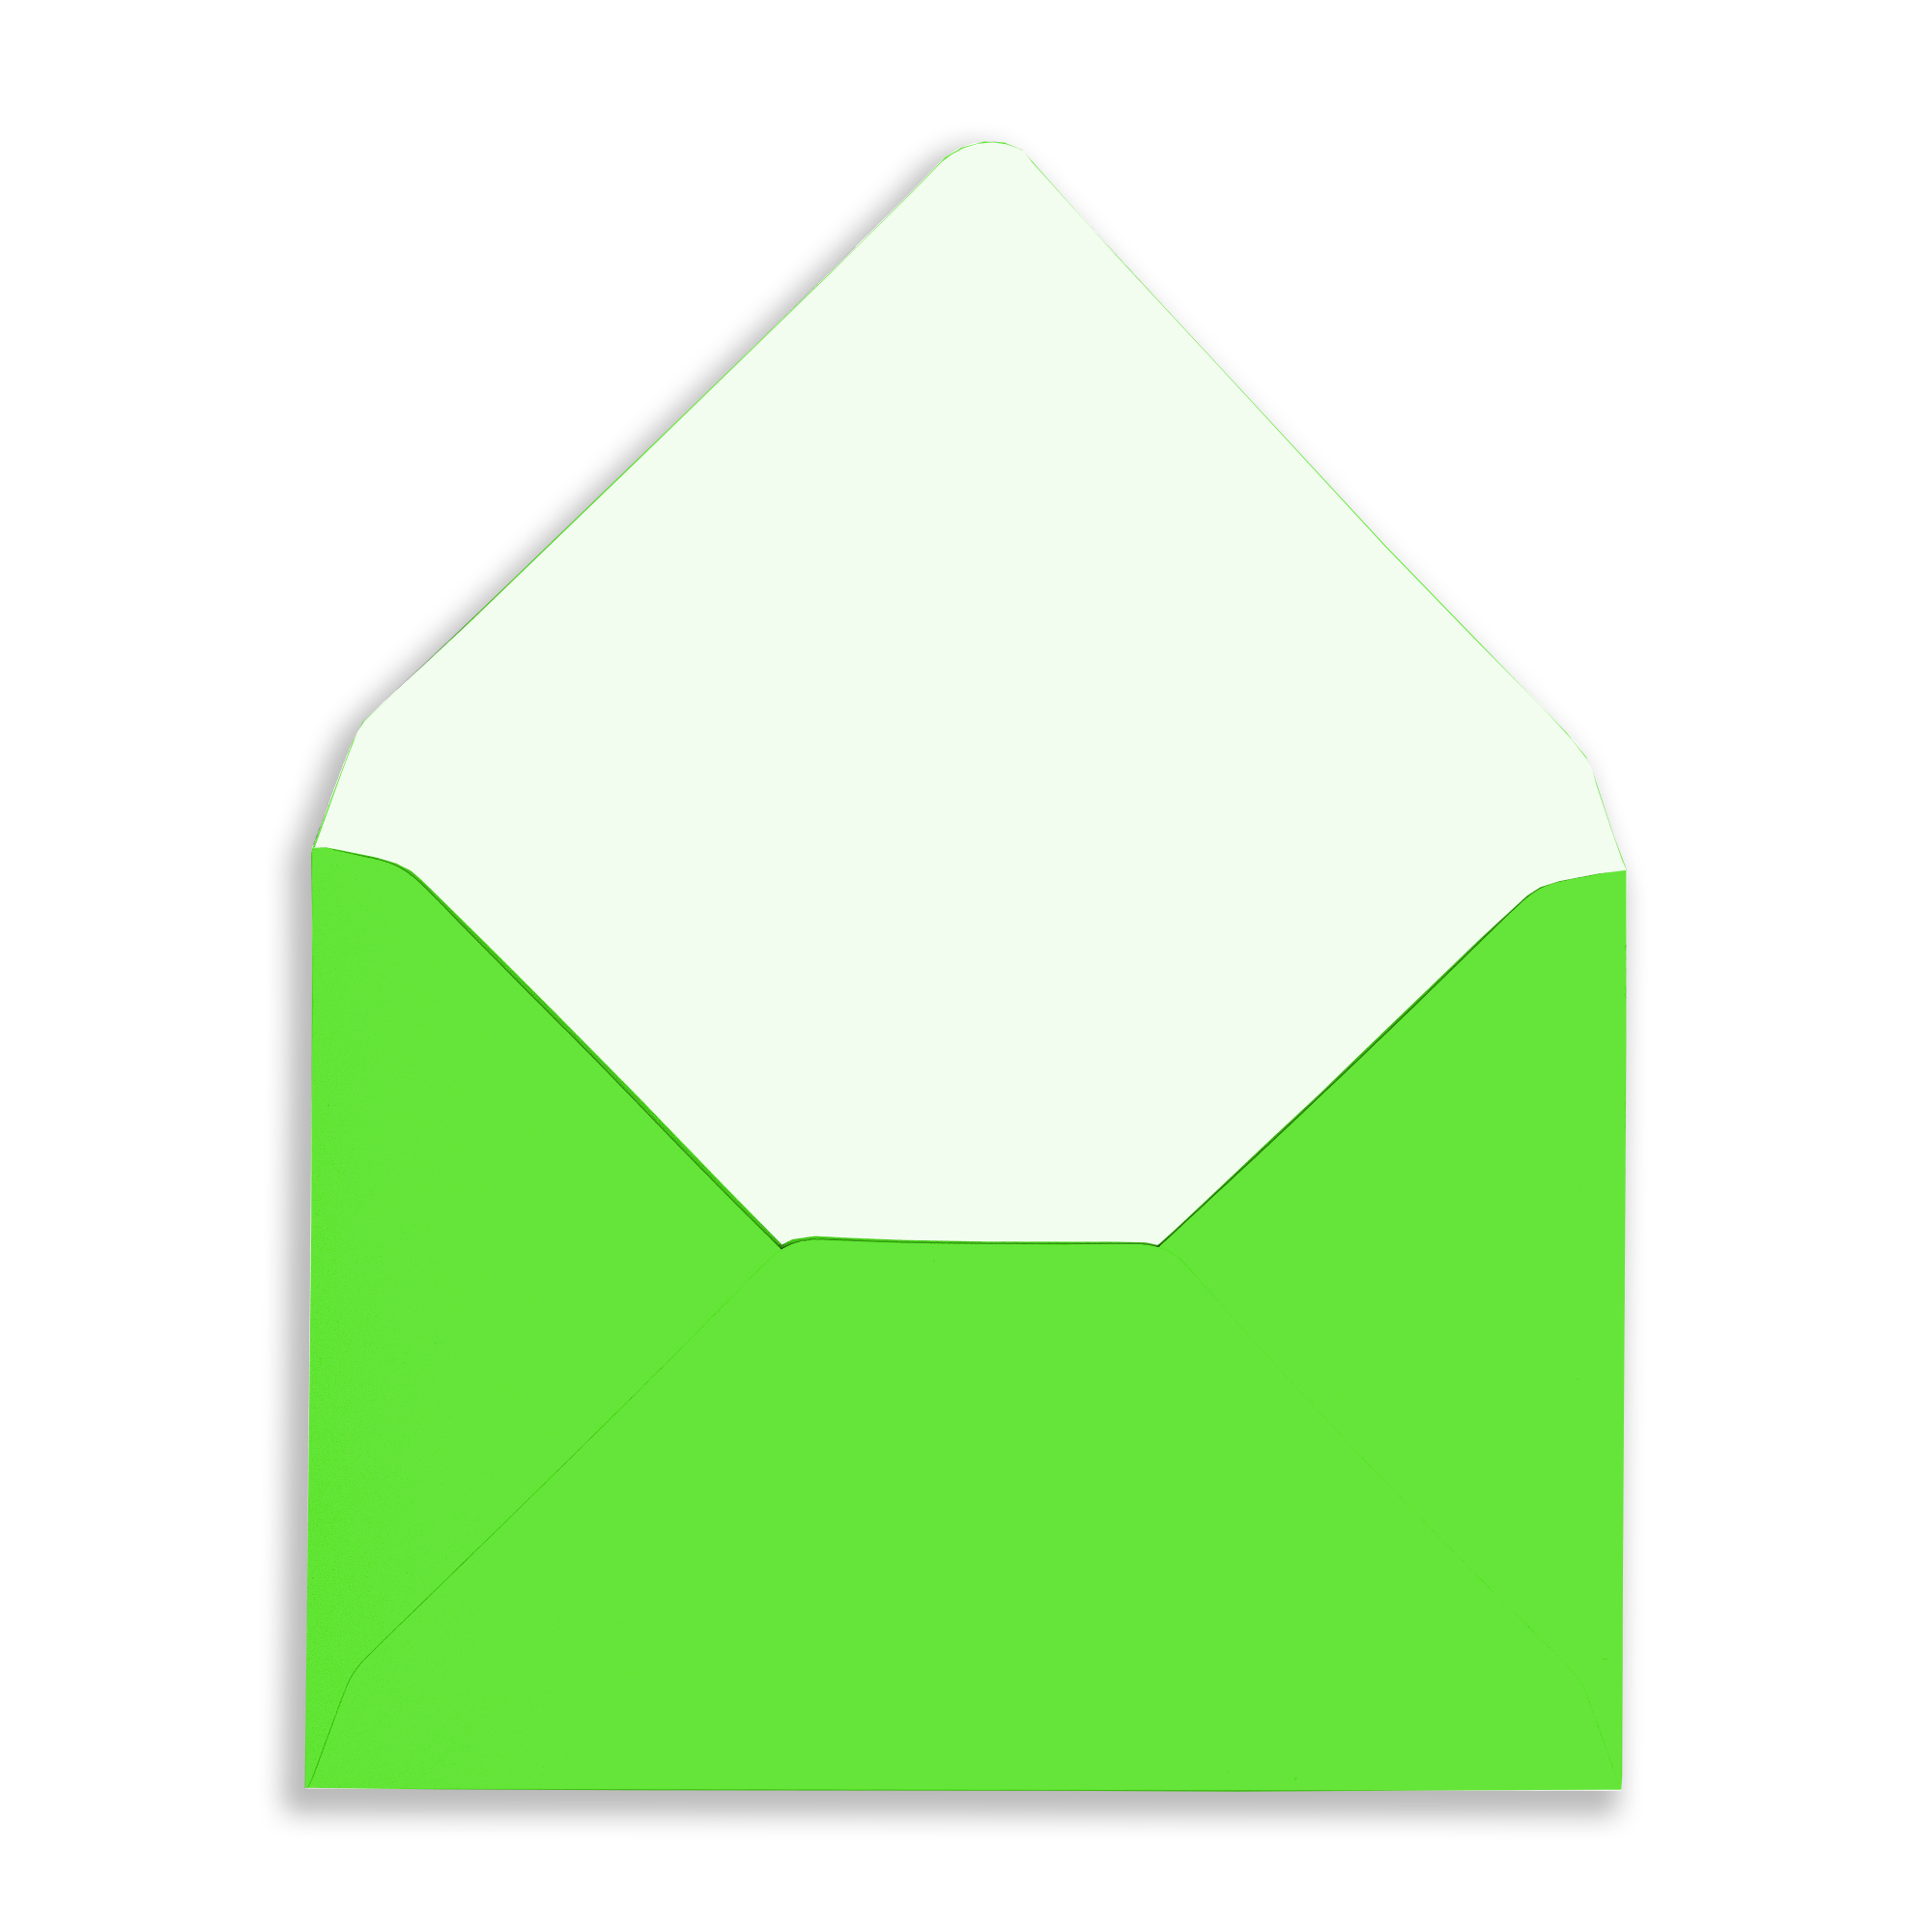 Rec_neon_green_Envelope_OpenFlap